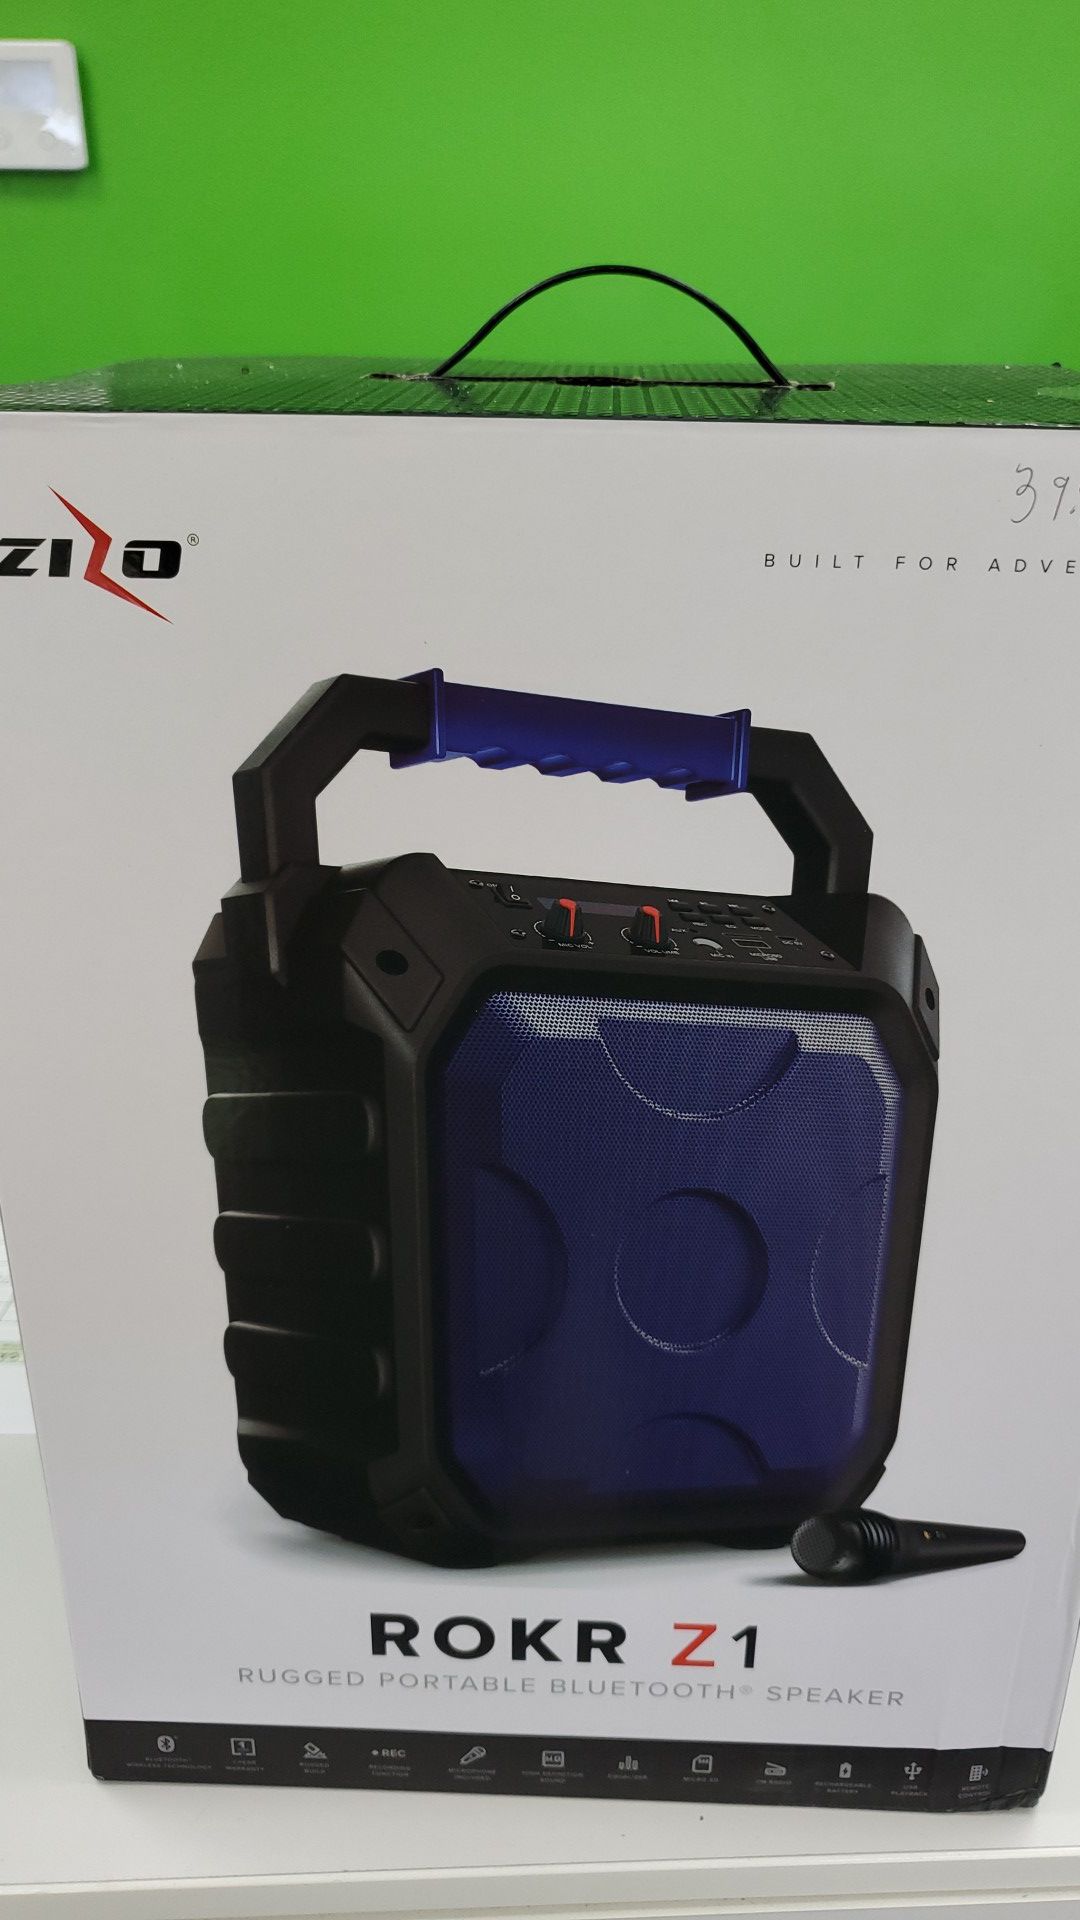 Rokr Z1 bluetooth speaker